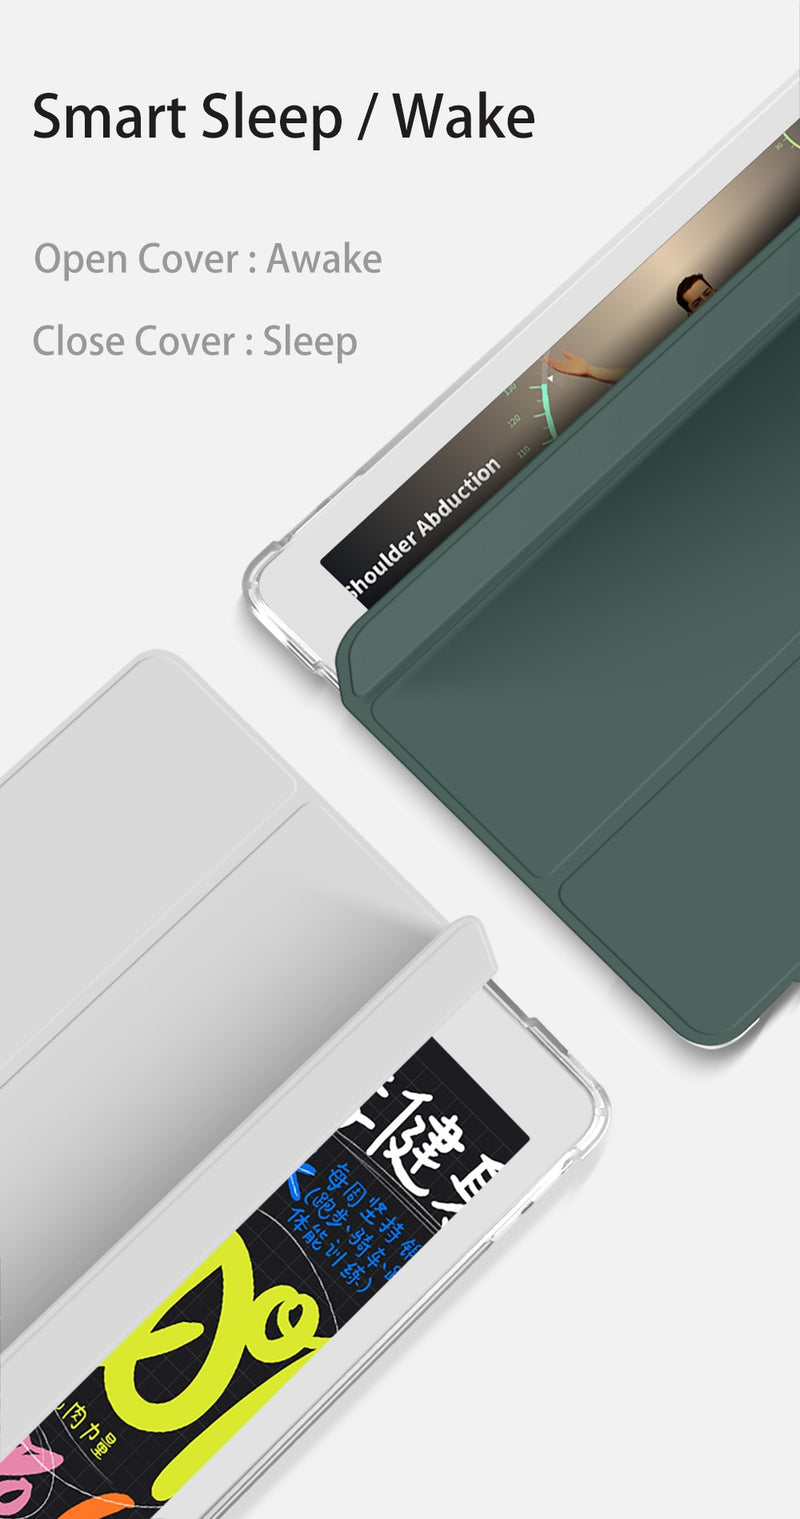 2020 Pro 12.9 4th iPad silicone case with pencil holder - KiwisLove